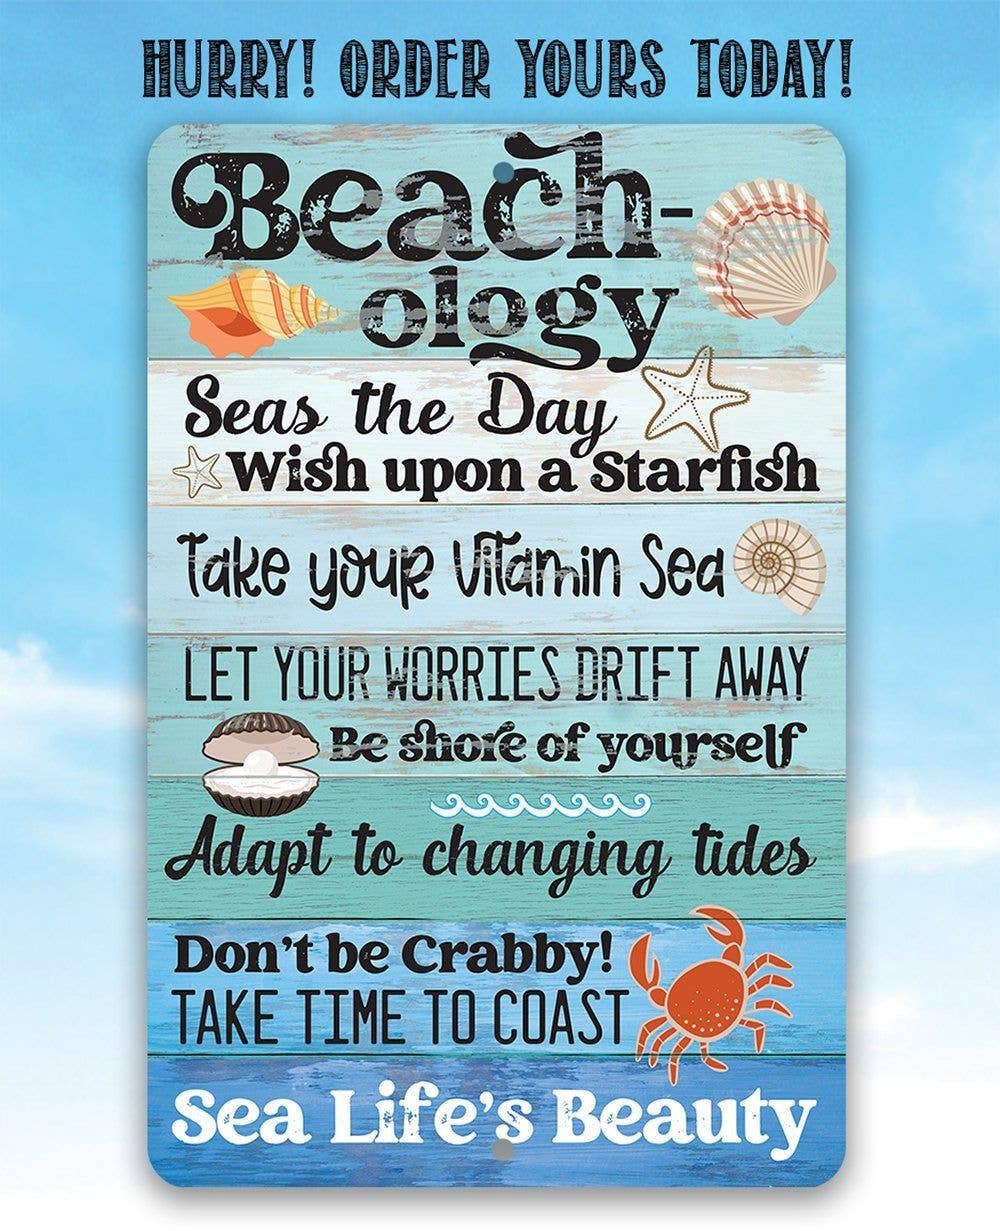 Beachology Sea Life's Beauty - Metal Sign: 8 x 12